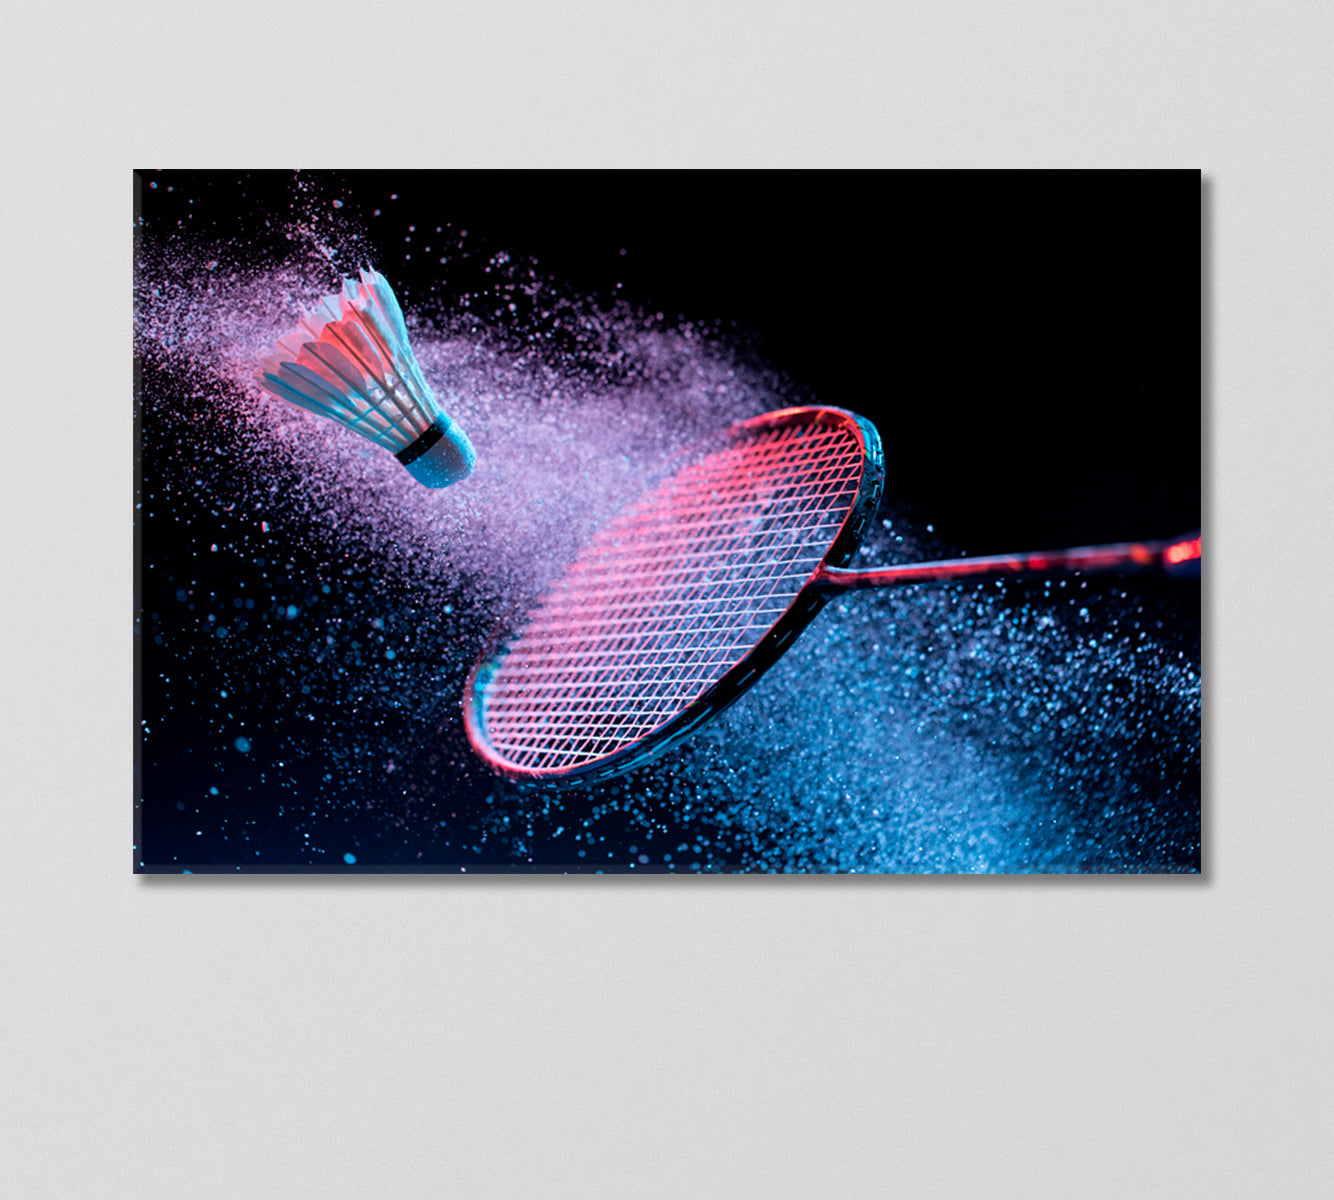 Badminton Racket in Motion Canvas Print-Canvas Print-CetArt-1 Panel-24x16 inches-CetArt